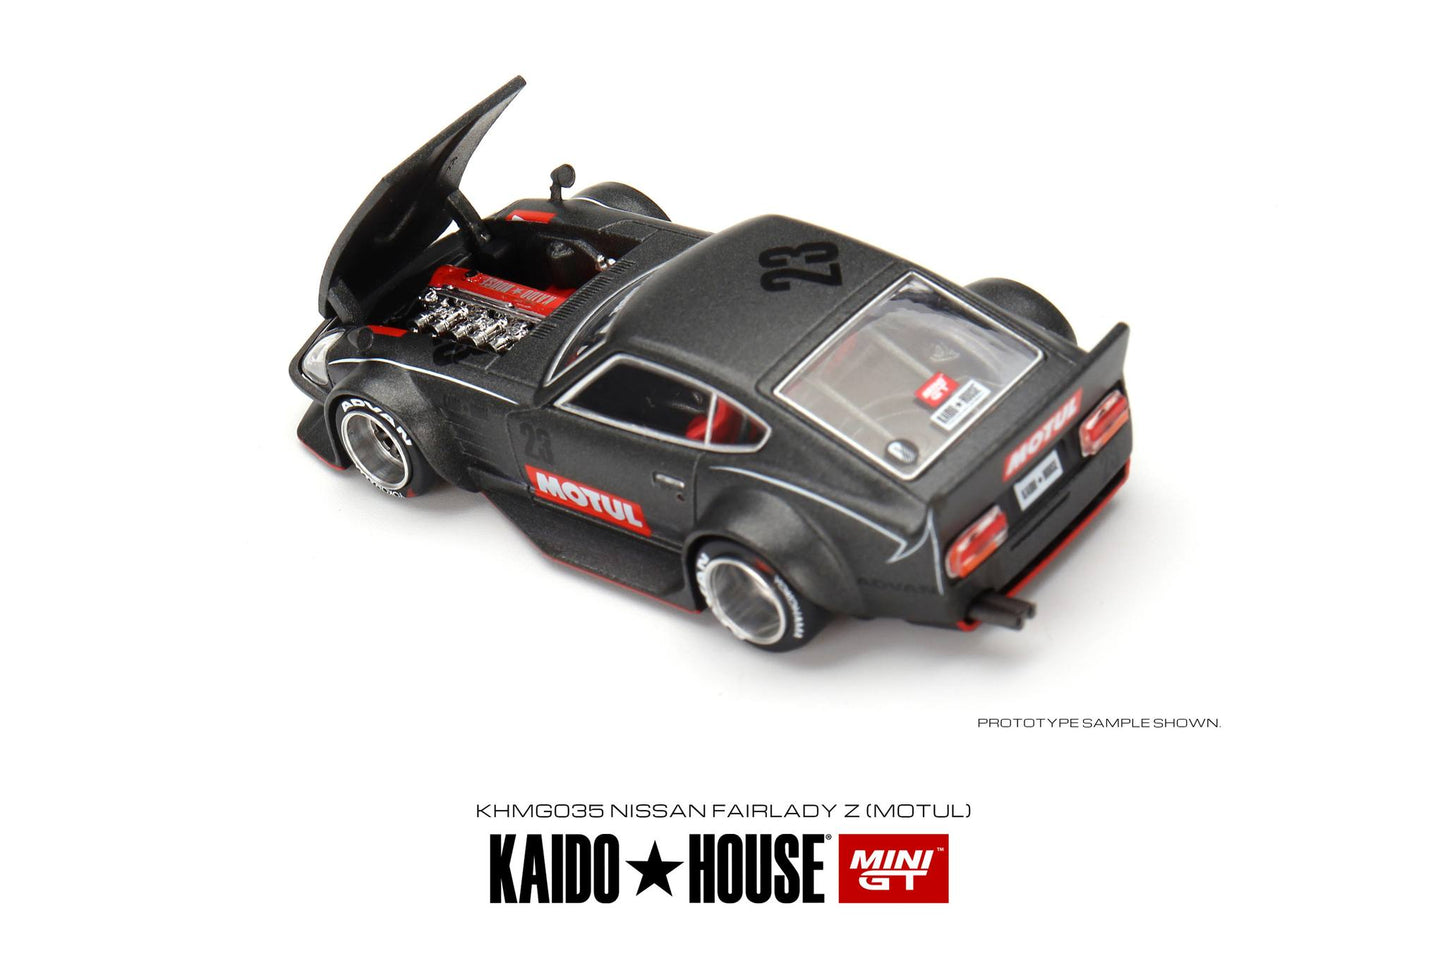 Mini GT x Kaido House Nissan Fairlady Z Motul Z V1